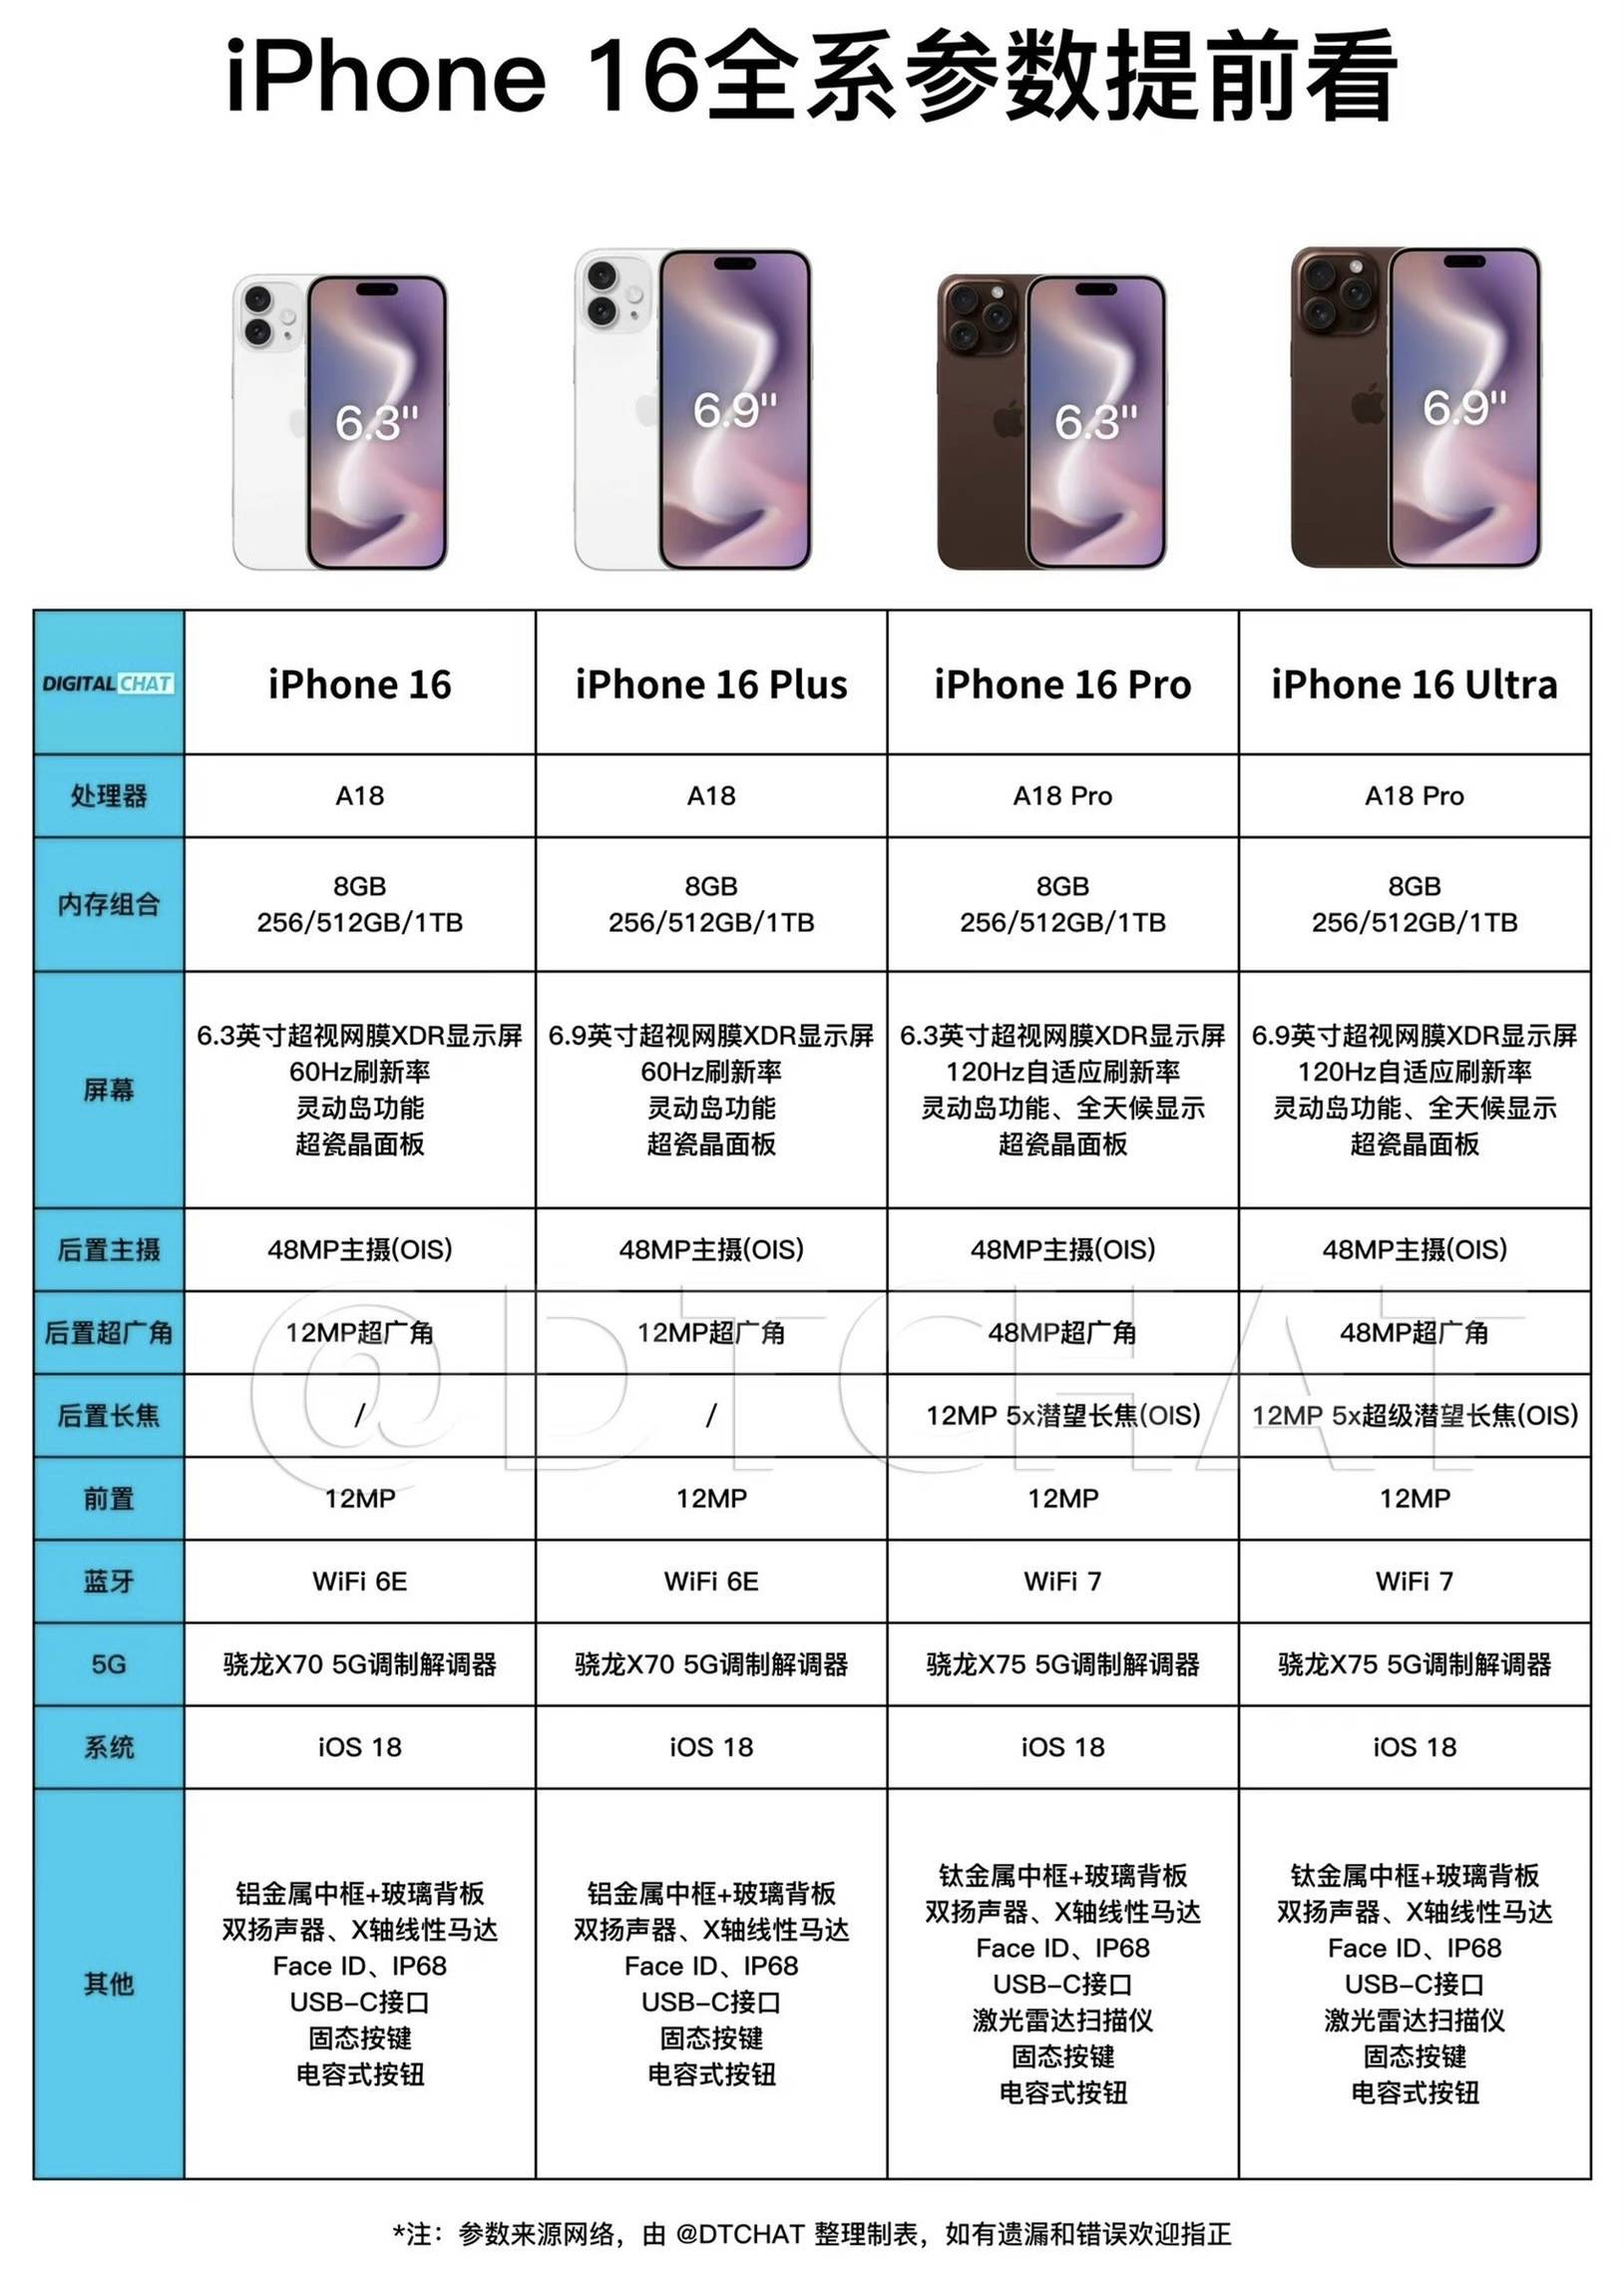 iPhone 16 Upgrades